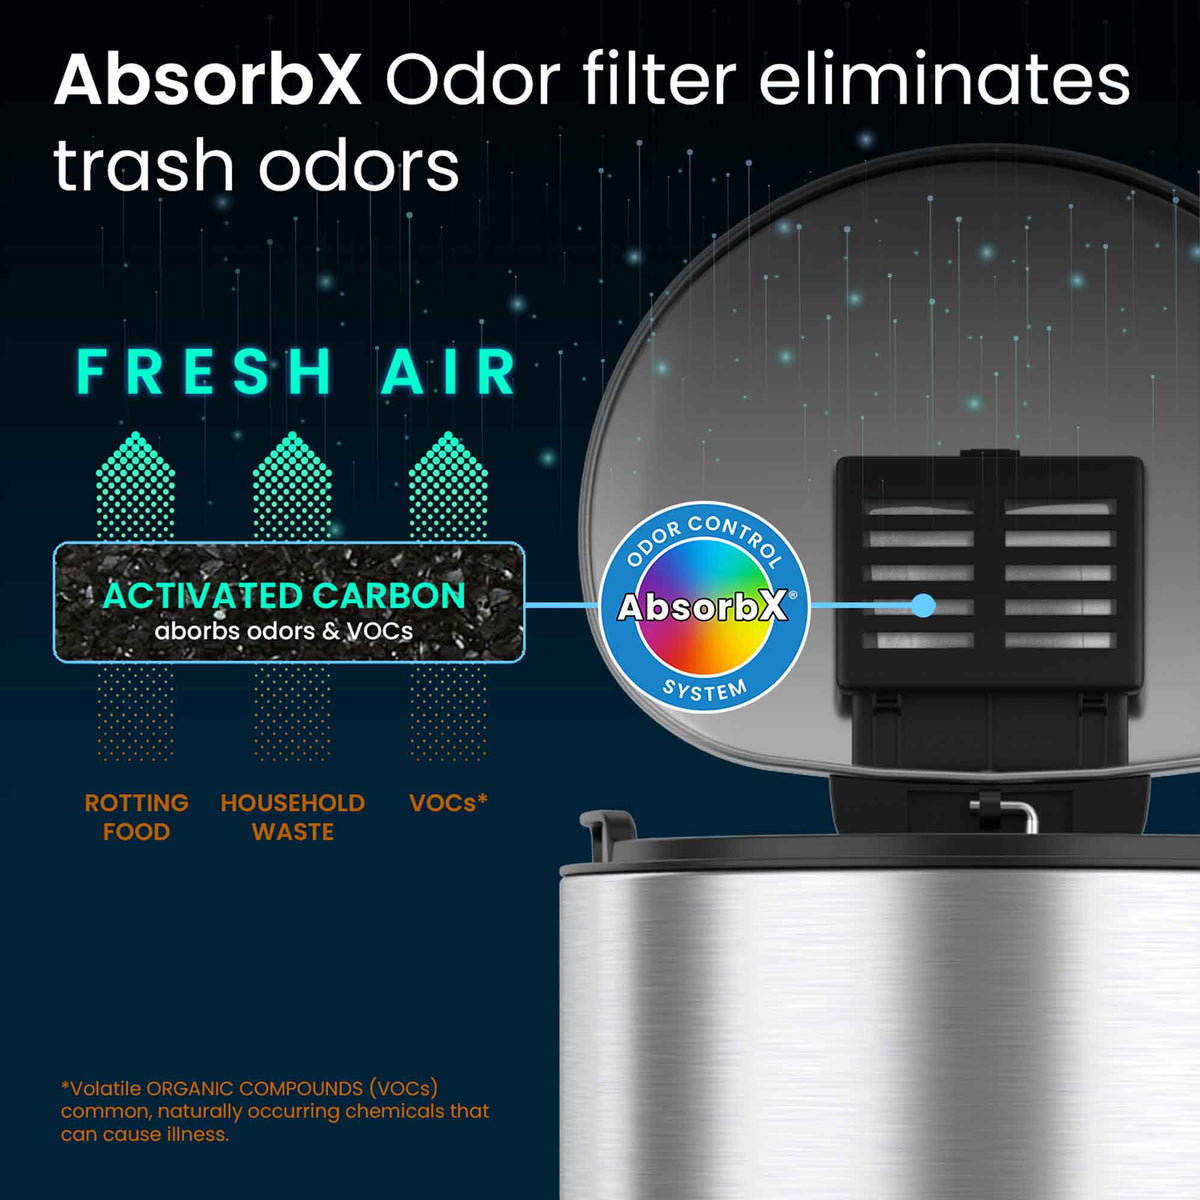 3 Gallon / 11.4 Liter SoftStep Semi-Round Step Pedal Trash Can AbsorbX odor filter eliminates trash odors